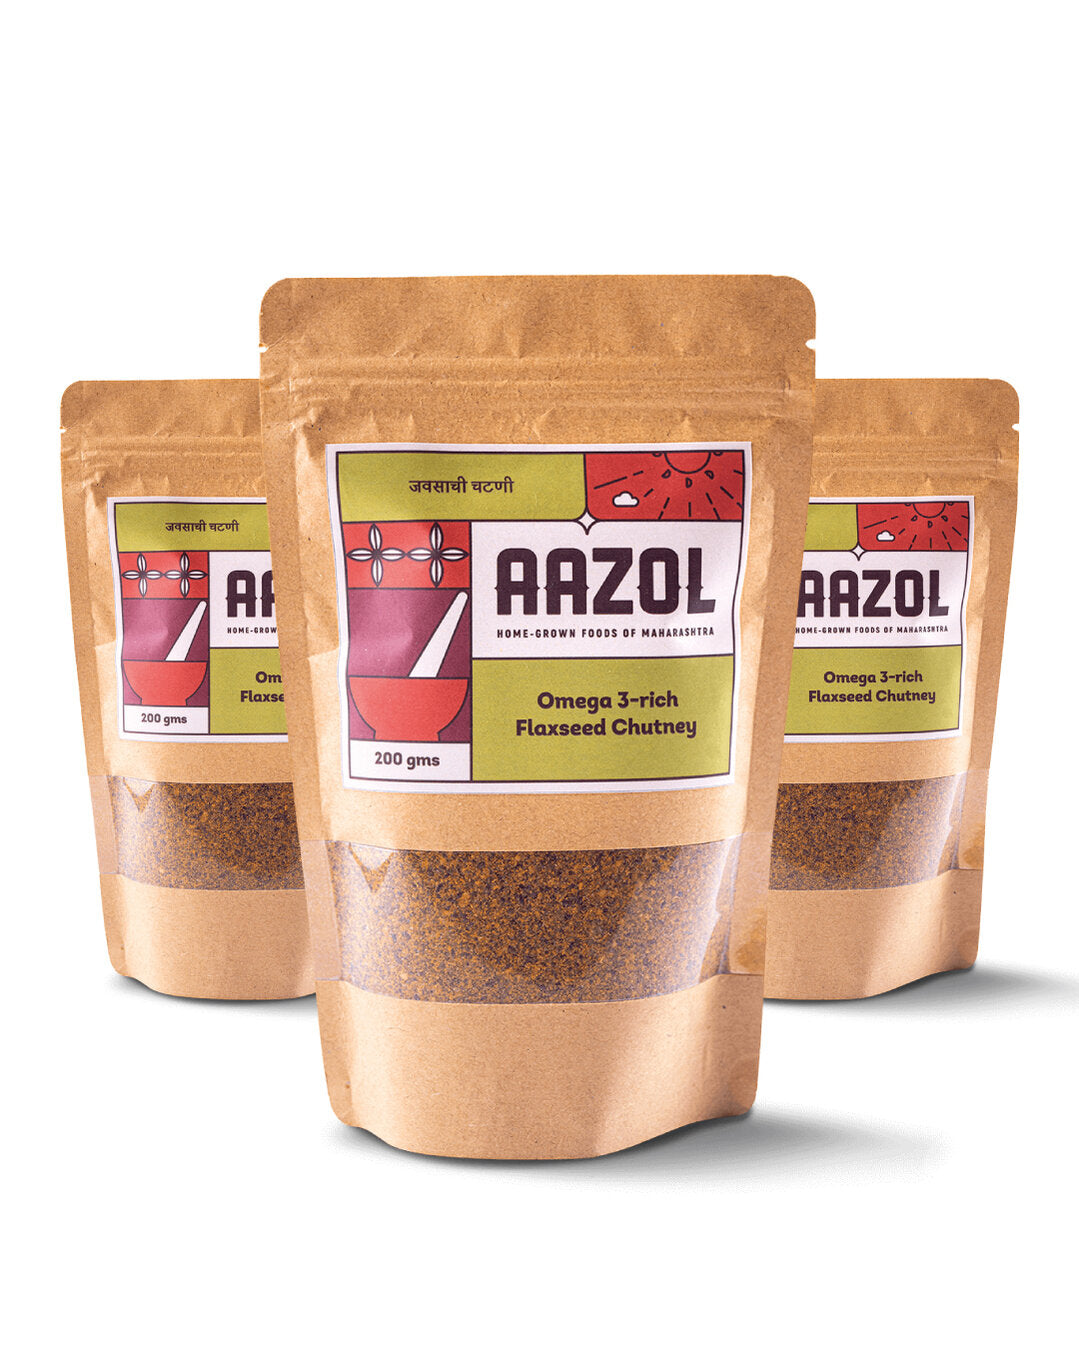 Aazol Omega 3-rich Flaxseed Chutney - 600g (Pack of 3 X 200g) - hfnl!fe